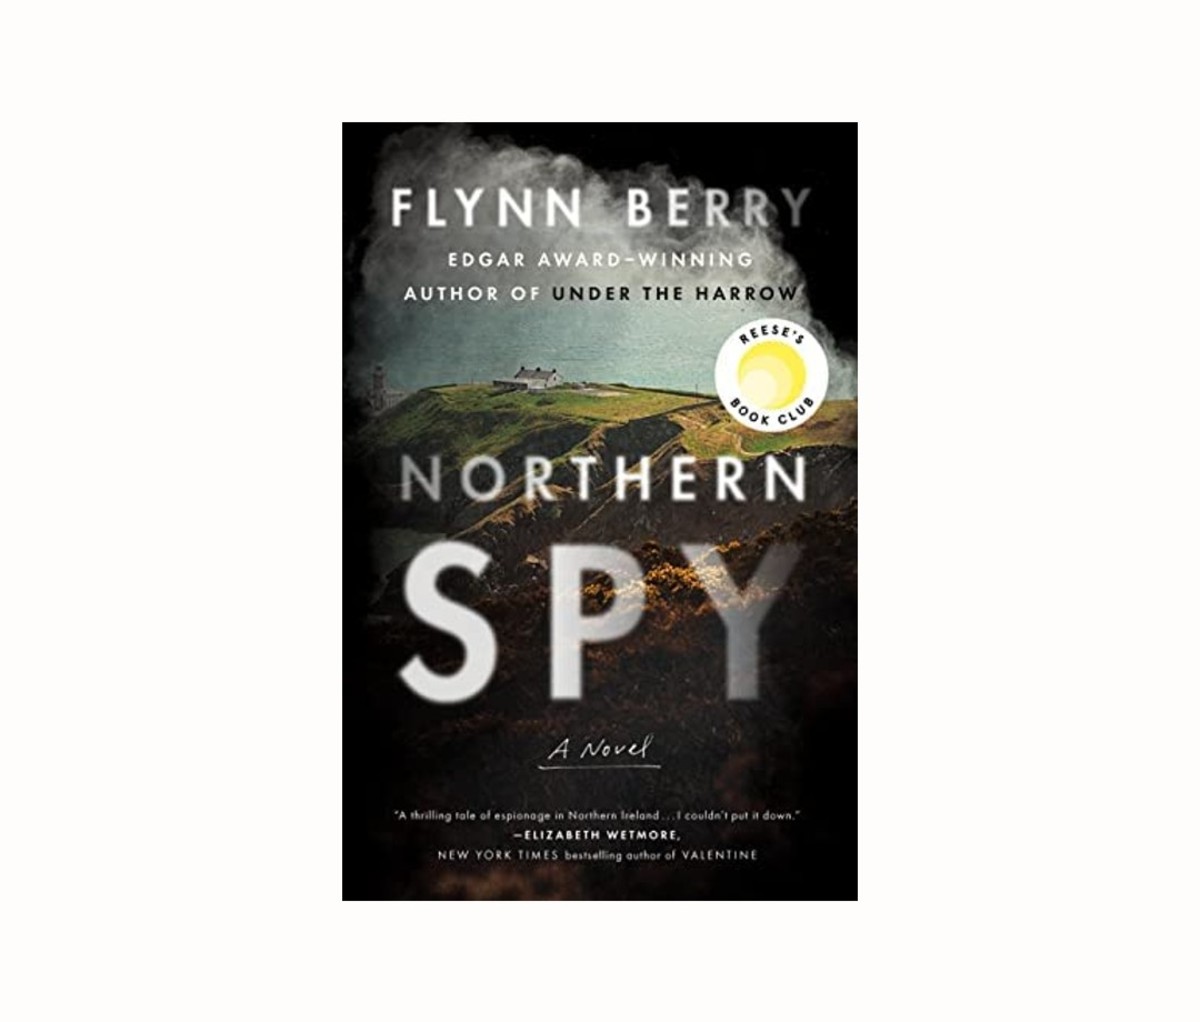 Northern Spy: A Novel by Flynn Berry